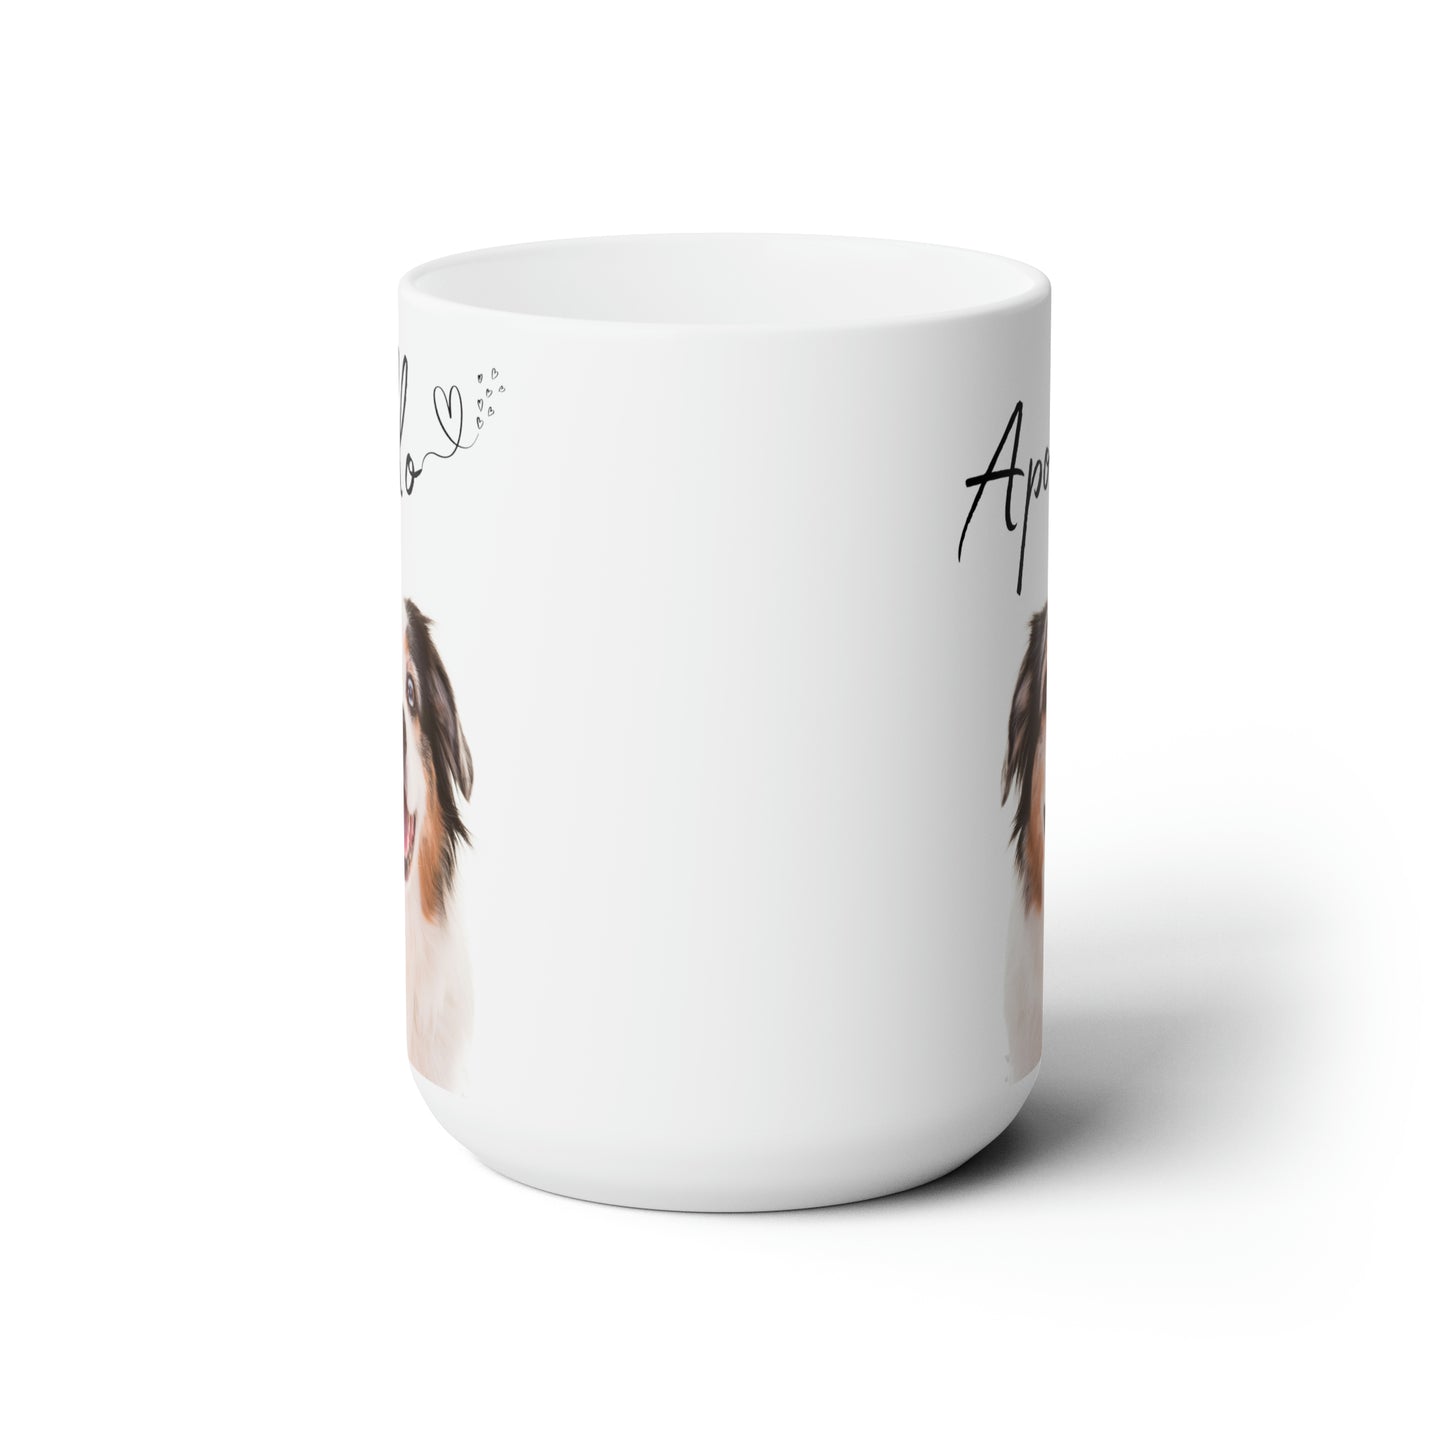 Apollo Custom Dog Name Ceramic Mug, 15oz, White